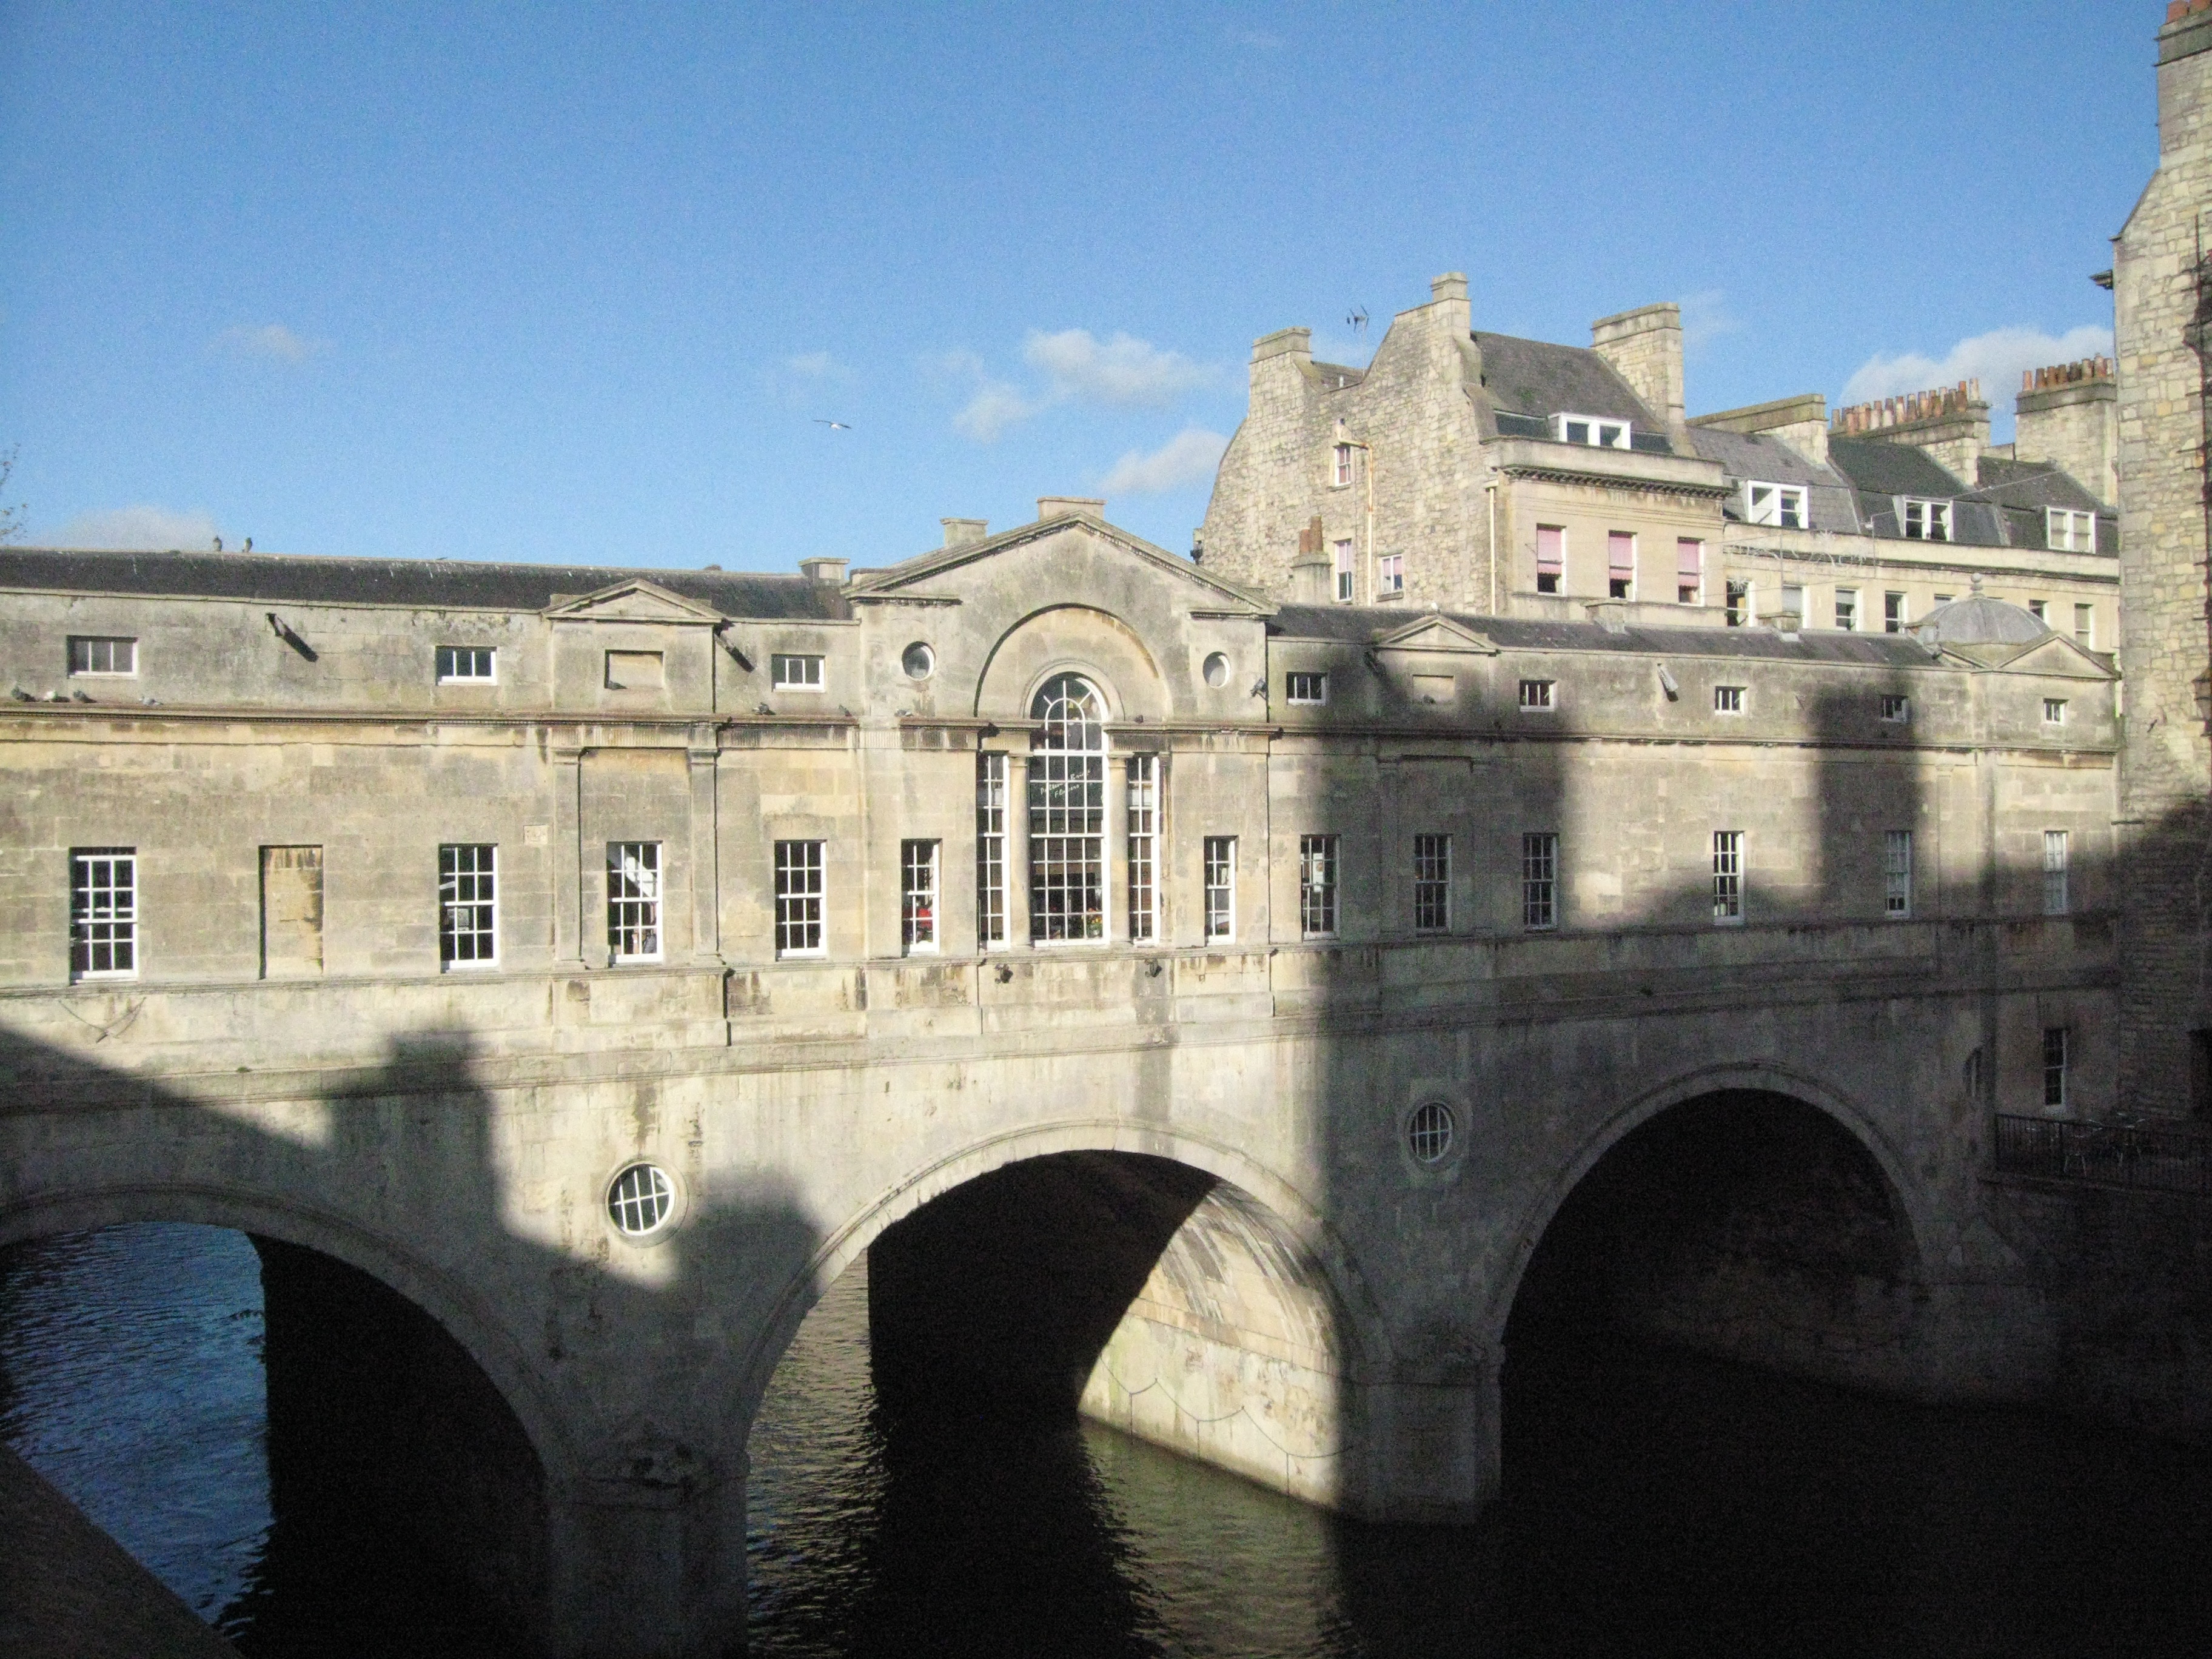 Bath, England--home to Jane Austin two centuries ago. Photo by me